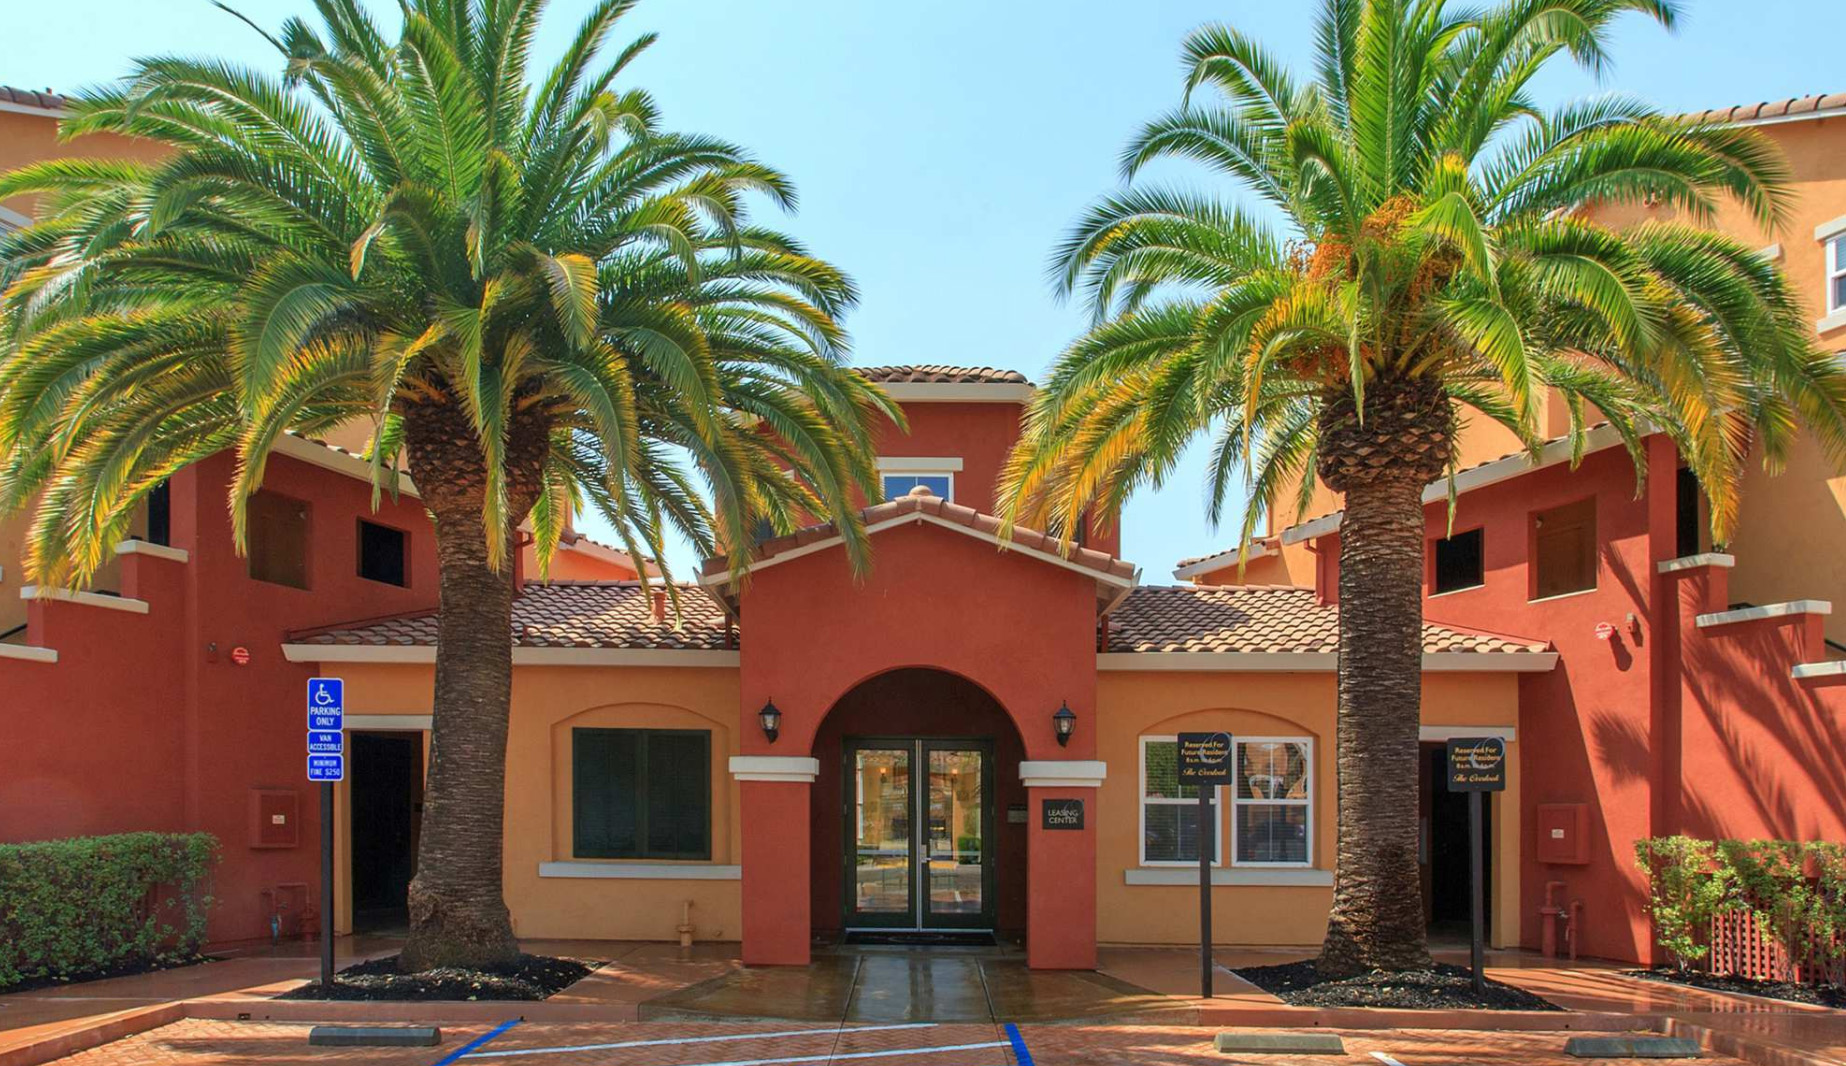 Median Rental in Santa Rosa For 2 Bedrooms is $2140 – Here's ... - Santa Rosa Press Democrat (blog)